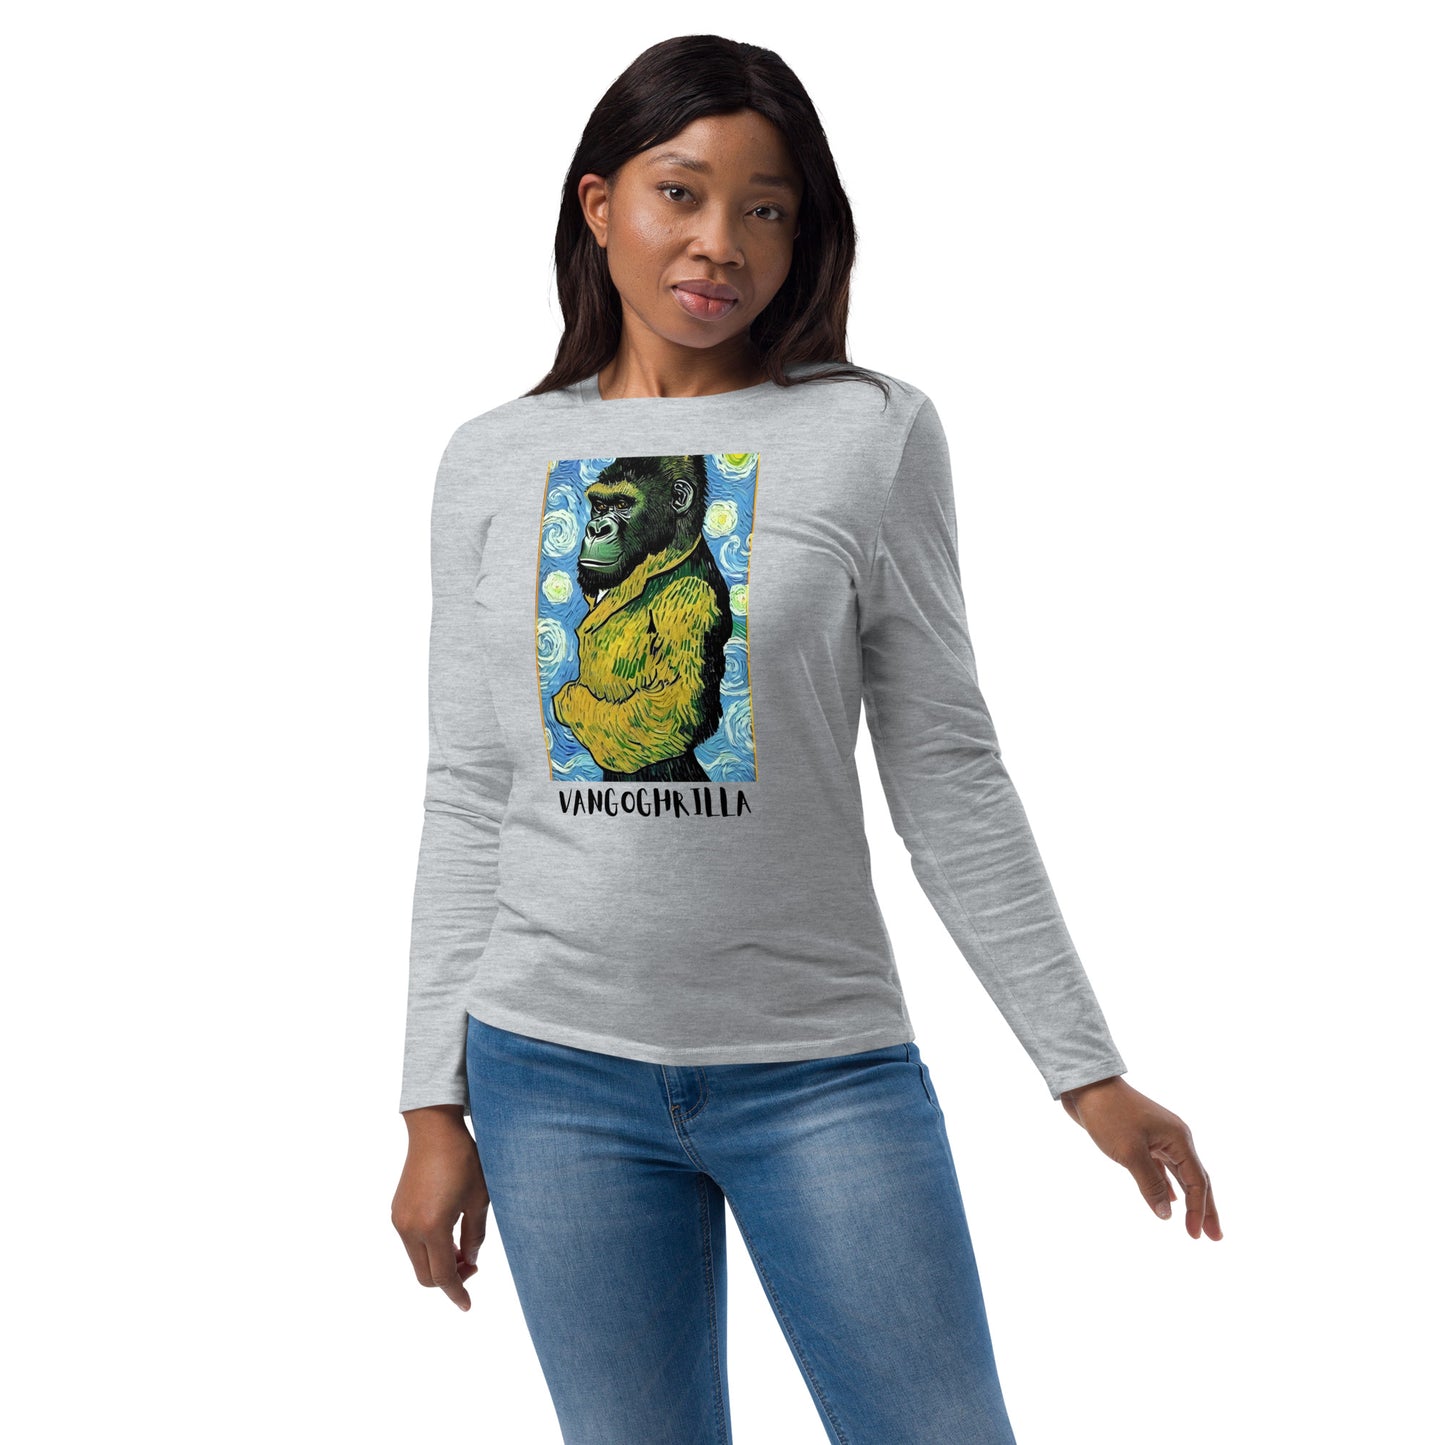 Van Goghrilla Unisex fashion long sleeve shirt